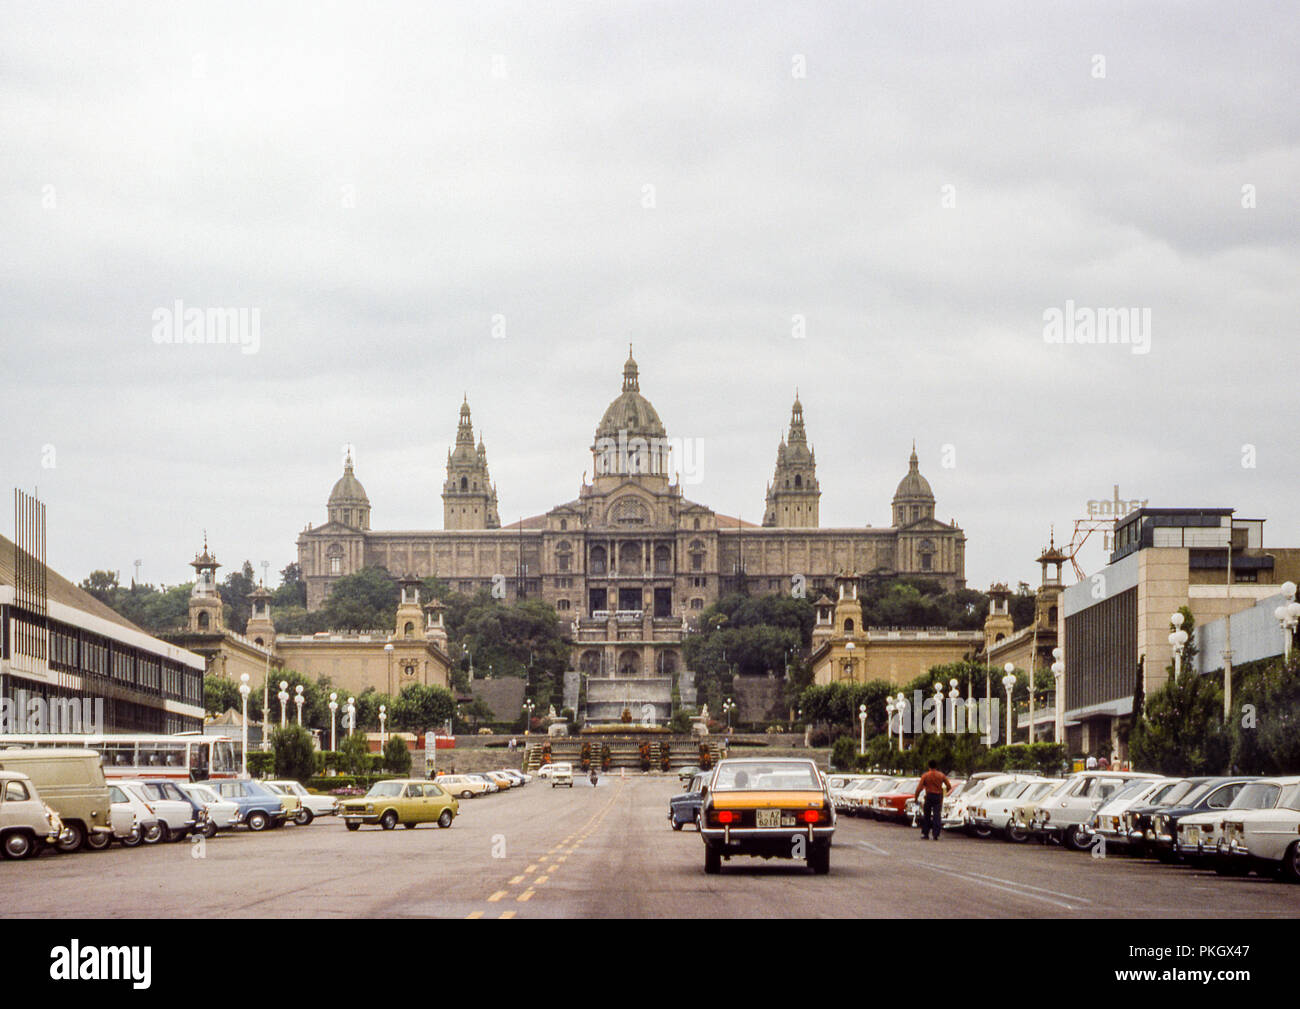 The National Palace of Montjuïc - Palacios de Alfonso XIII y Victoria Eugenia as seen from Avinguda de la Reina Maria Cristina - Original 1975 Archival Photo. Stock Photo